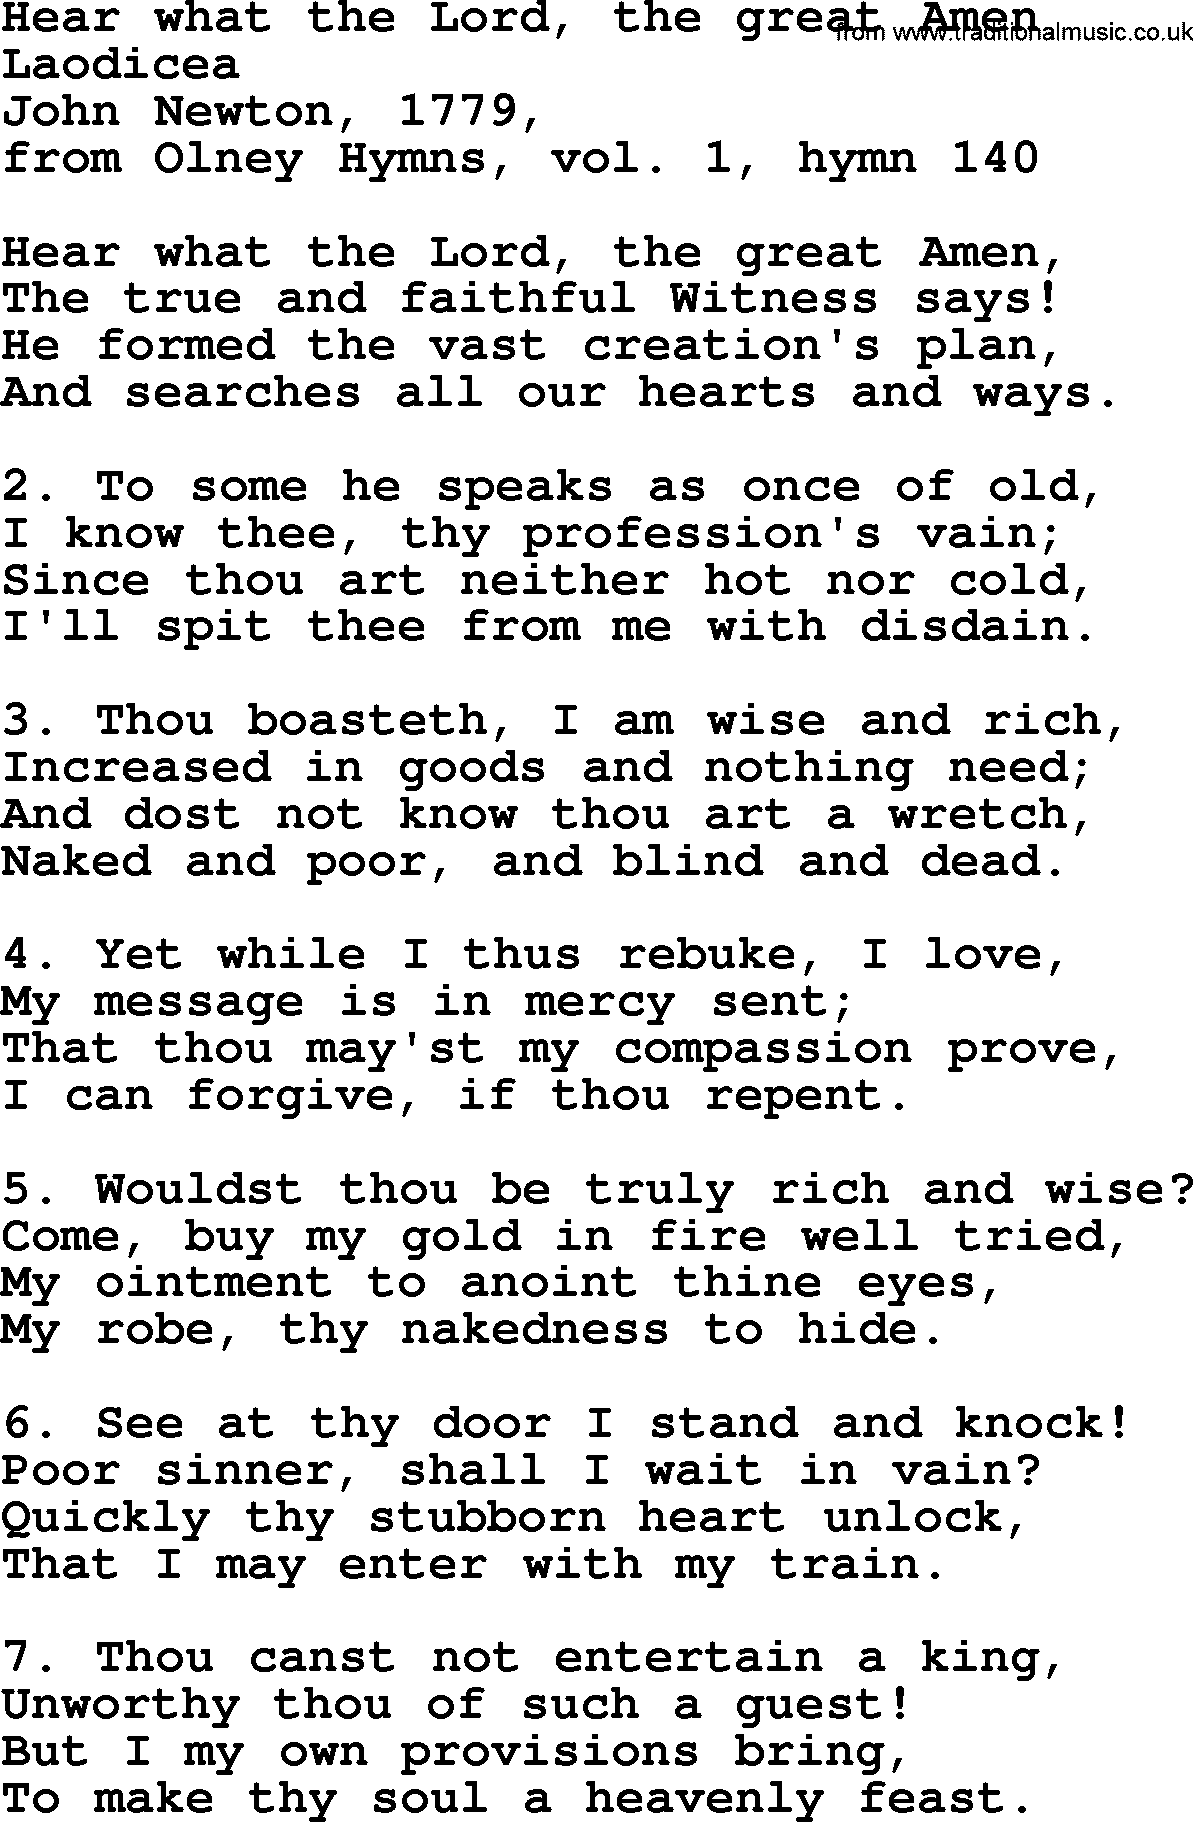 John Newton hymn: Hear What The Lord, The Great Amen, lyrics